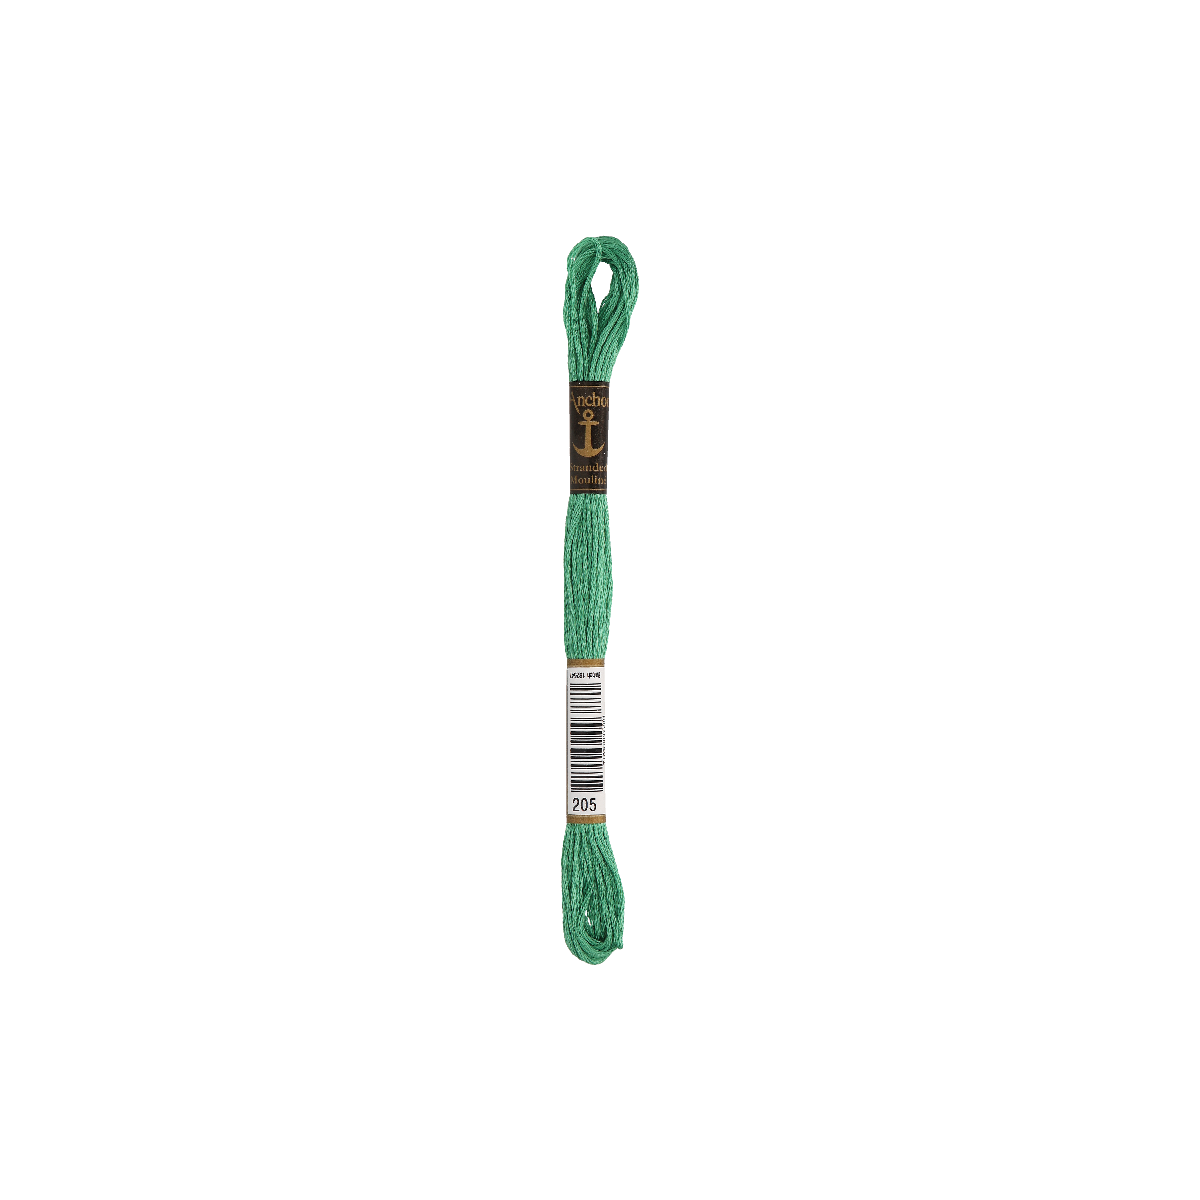 Anchor Sticktwist 8m, verde fosforoso, cotone, colore...